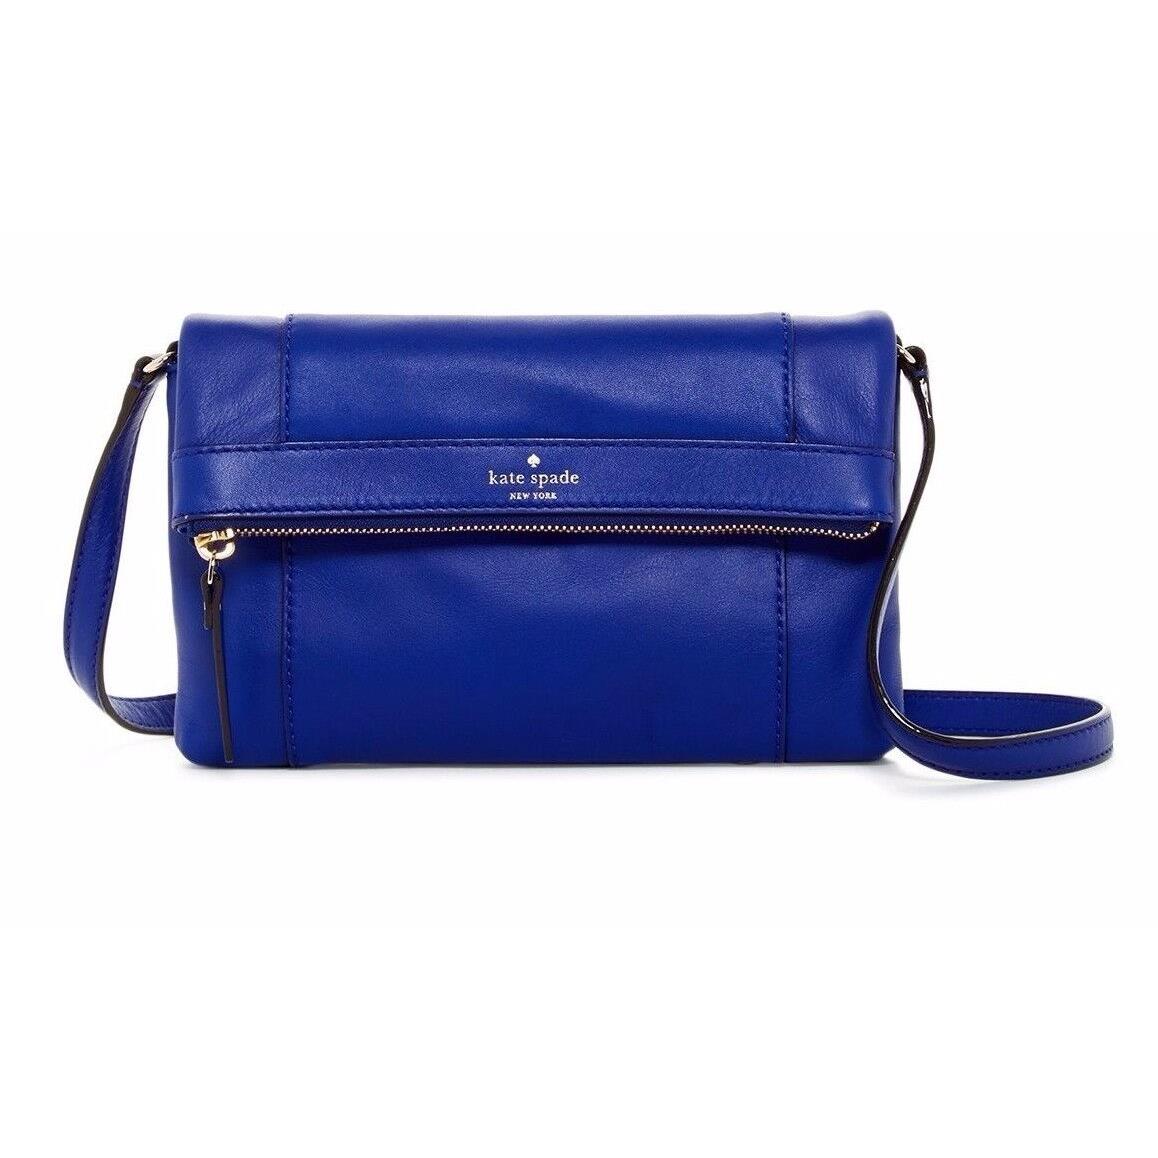 Kate Spade Freemont Place Julian Blue Leather Purse Crossbody Bag 38402